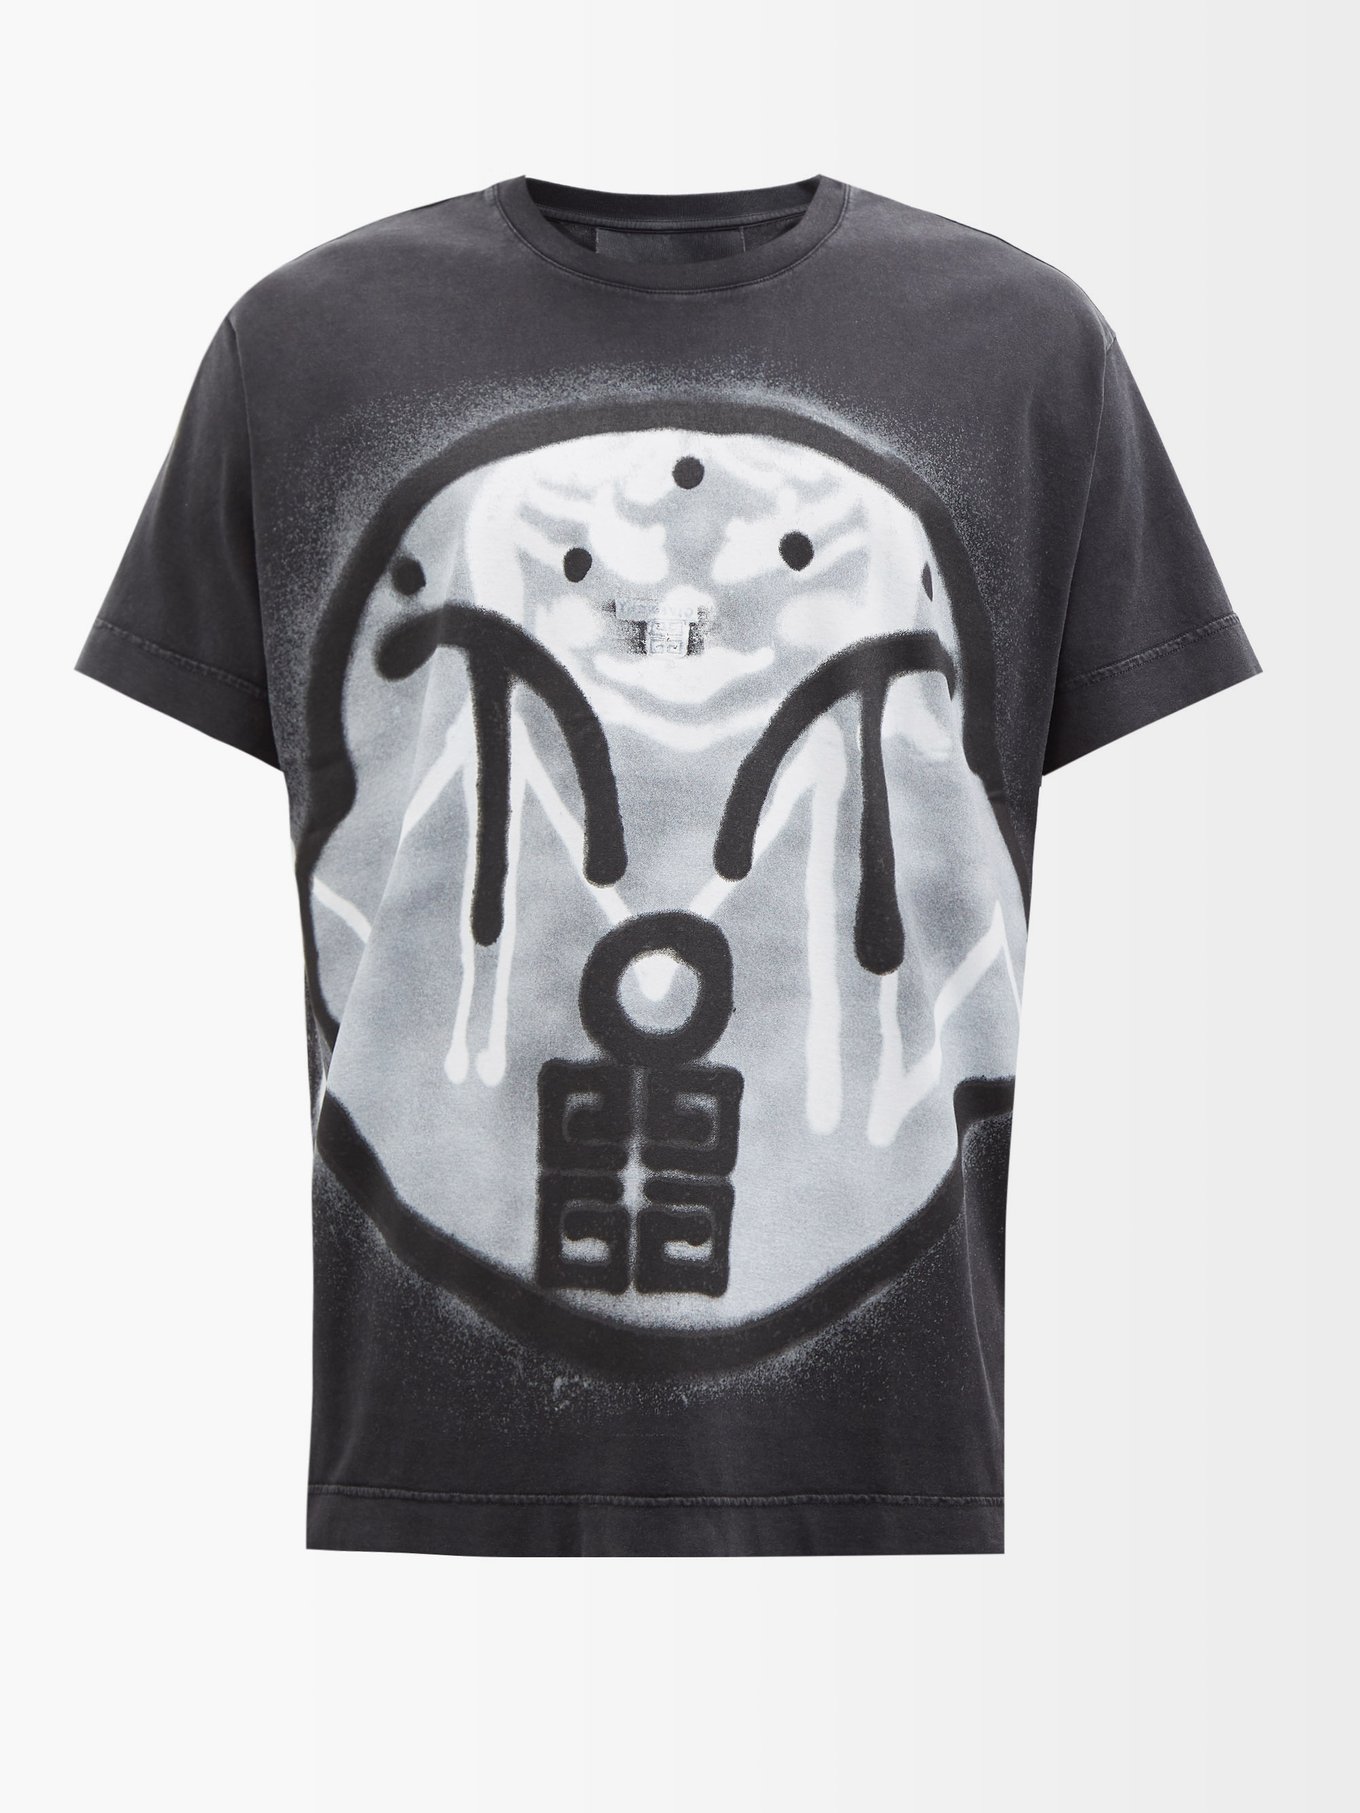 X Chito printed cotton-jersey T-shirt | Givenchy